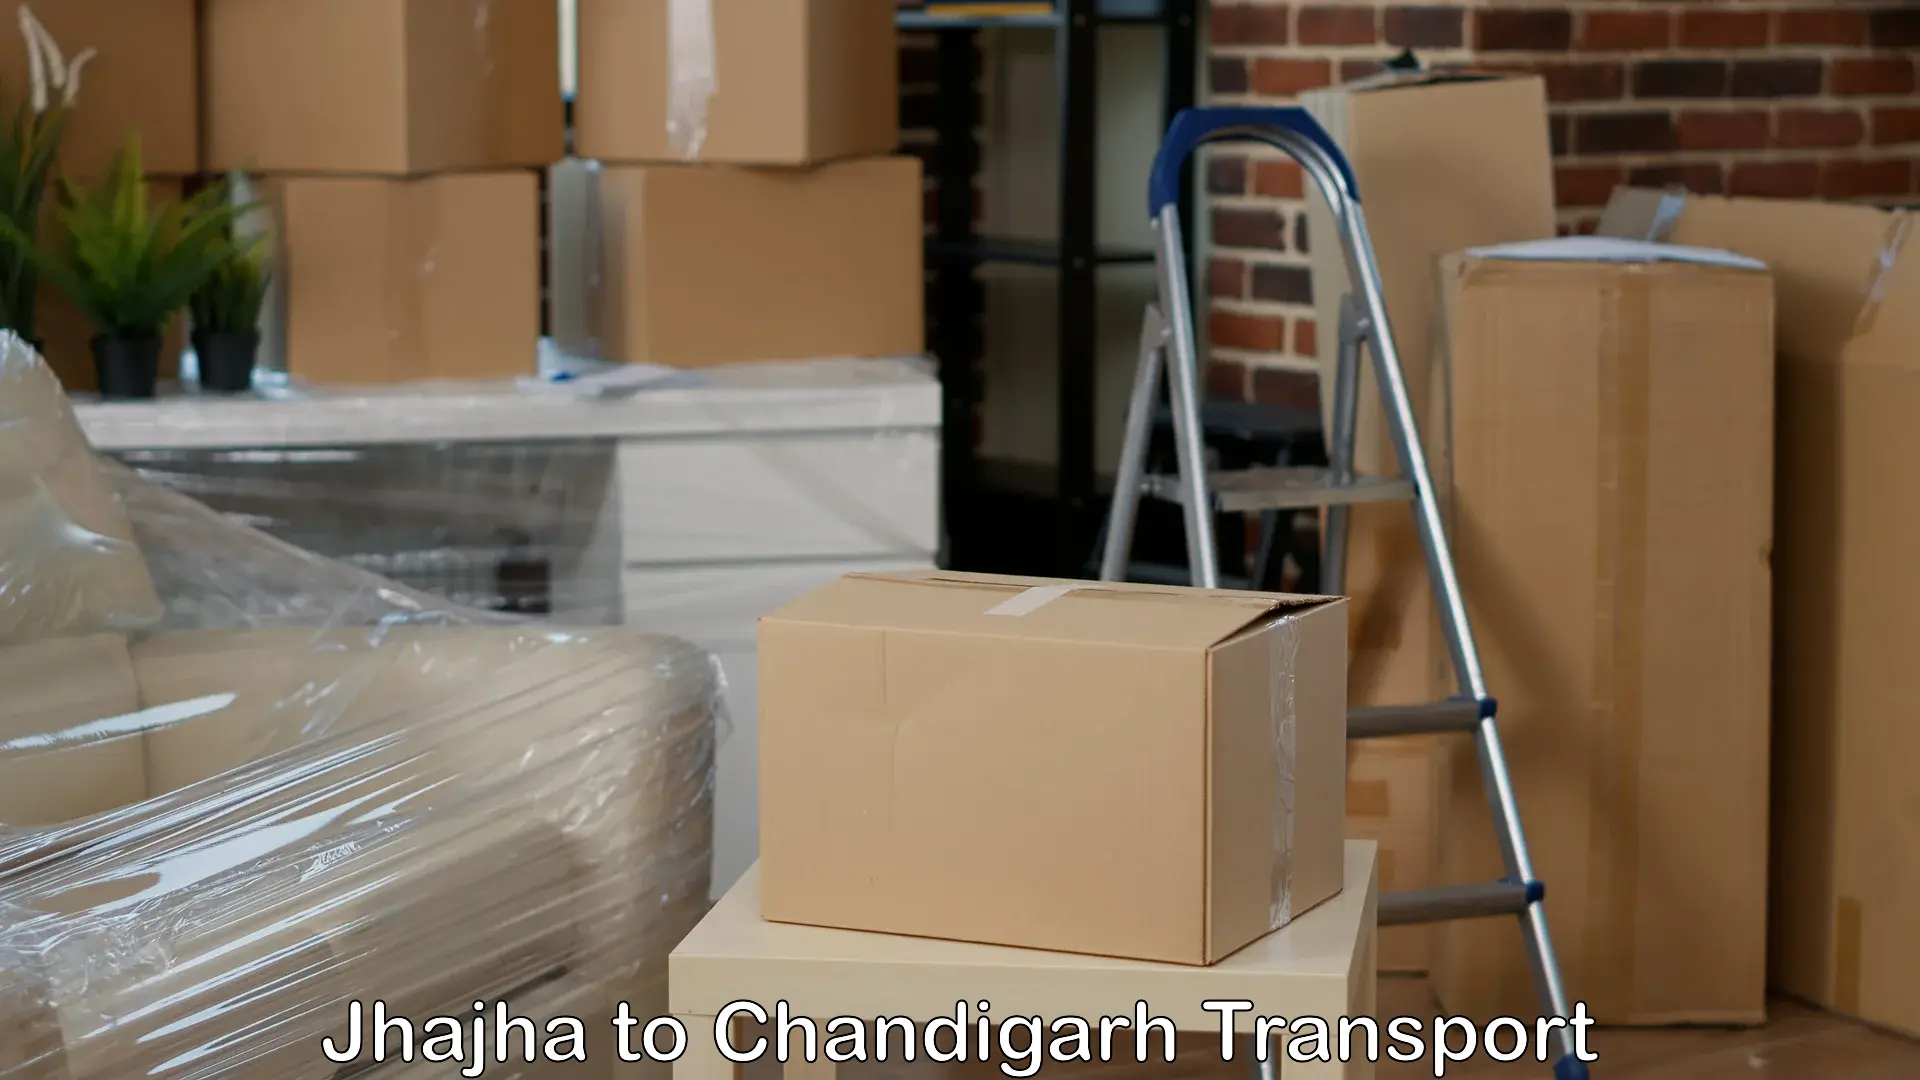 Truck transport companies in India Jhajha to Chandigarh